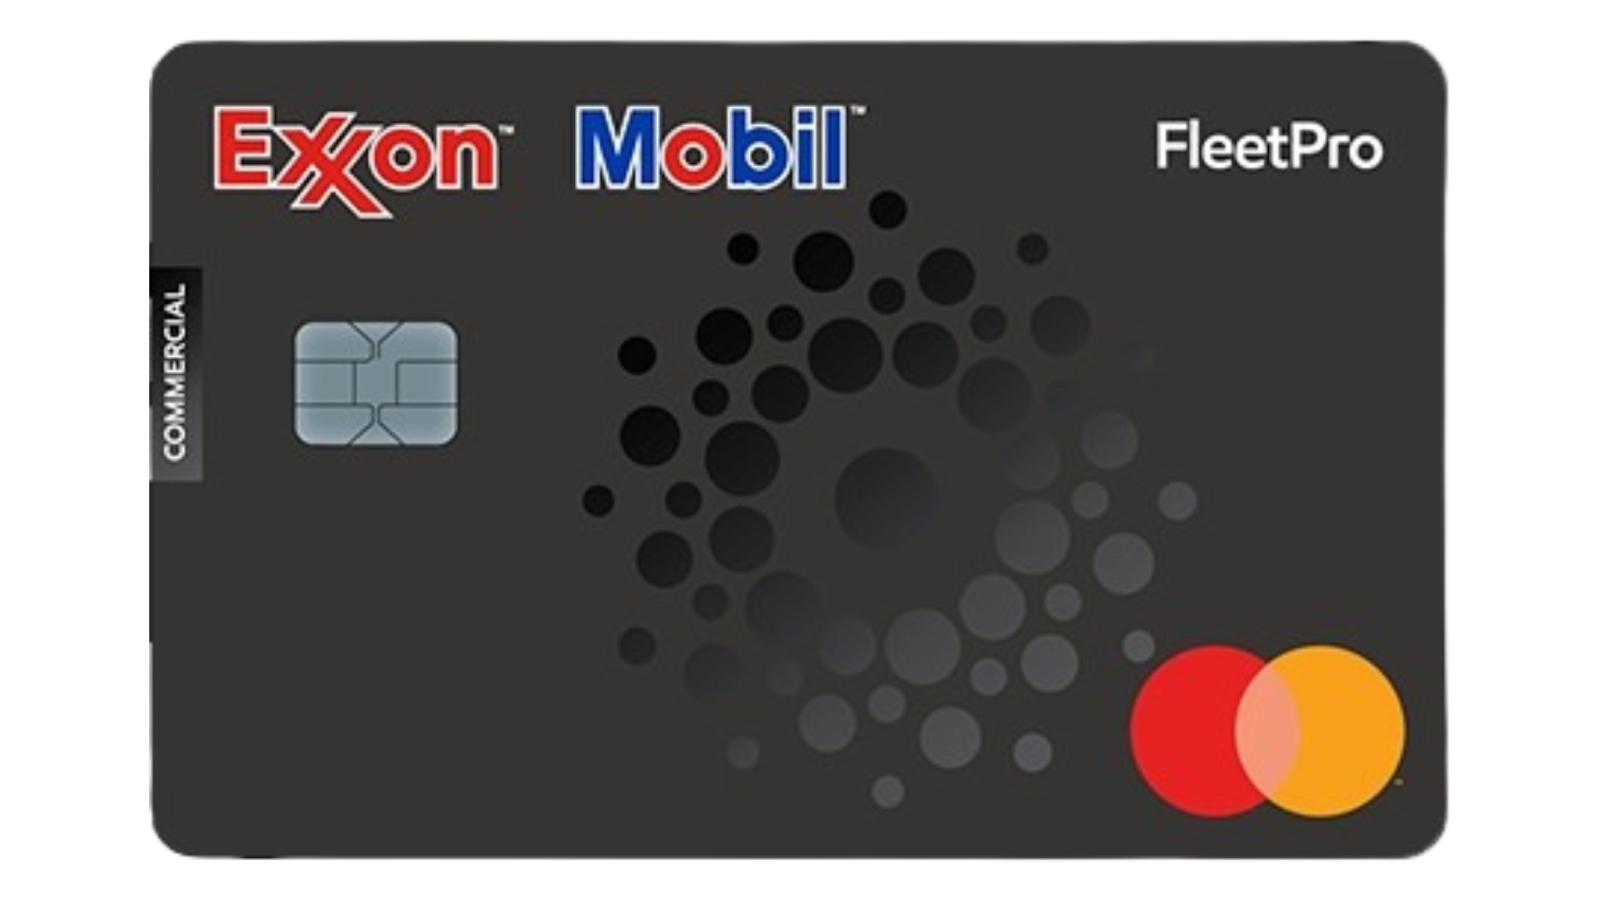 Exxon Mobil fleetpro card